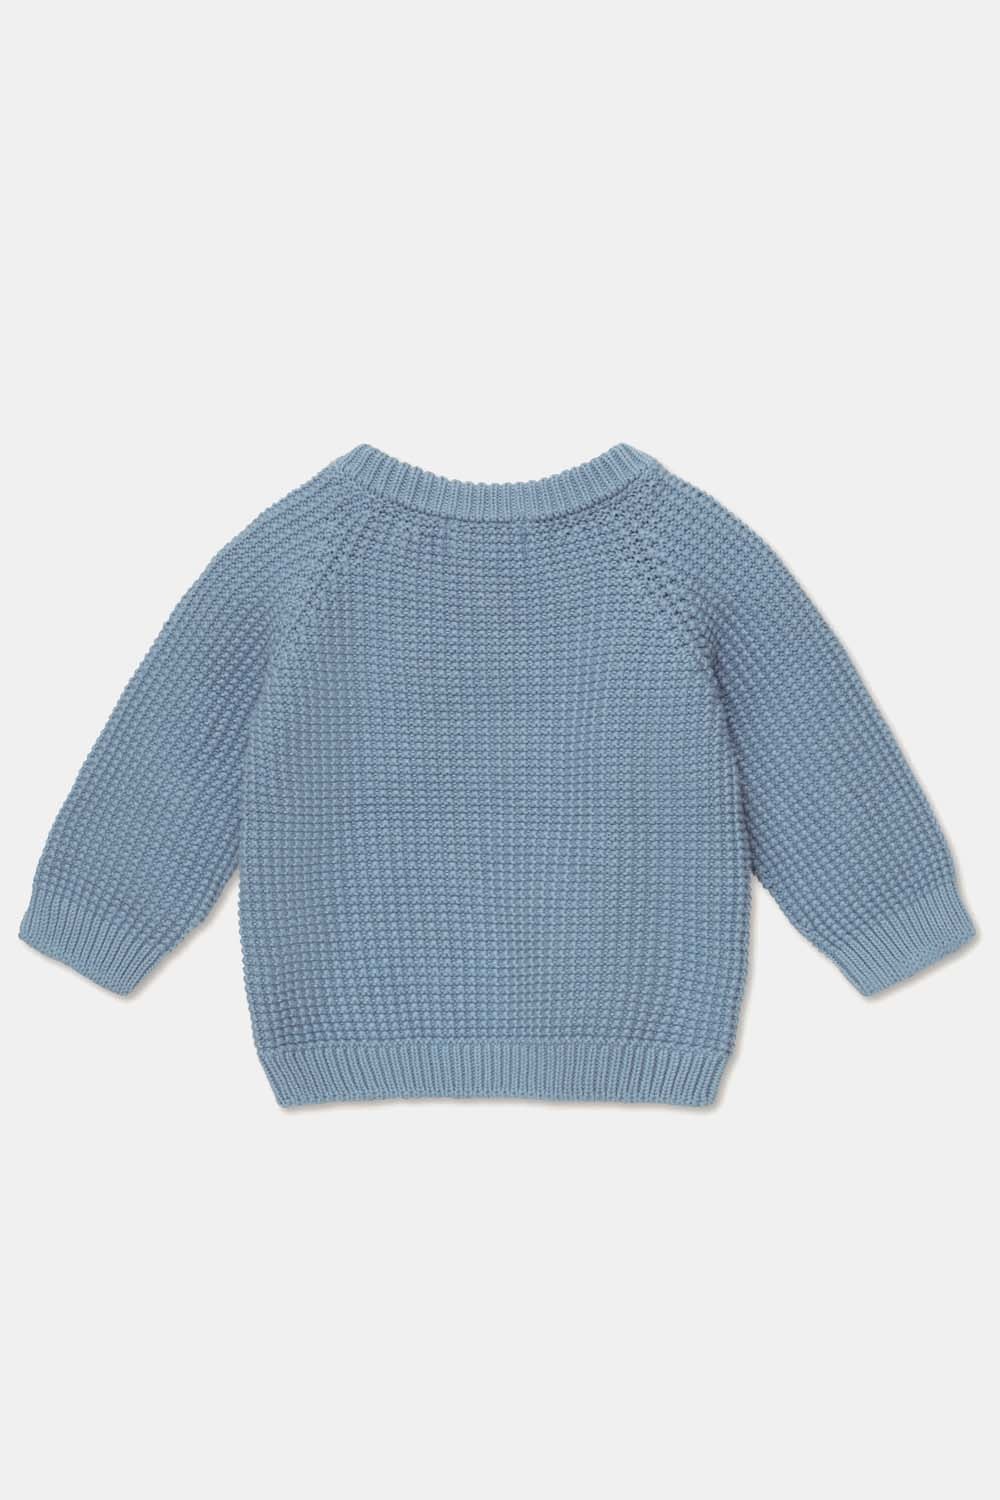 Mika waffle knit raglan pullover sky blue-2